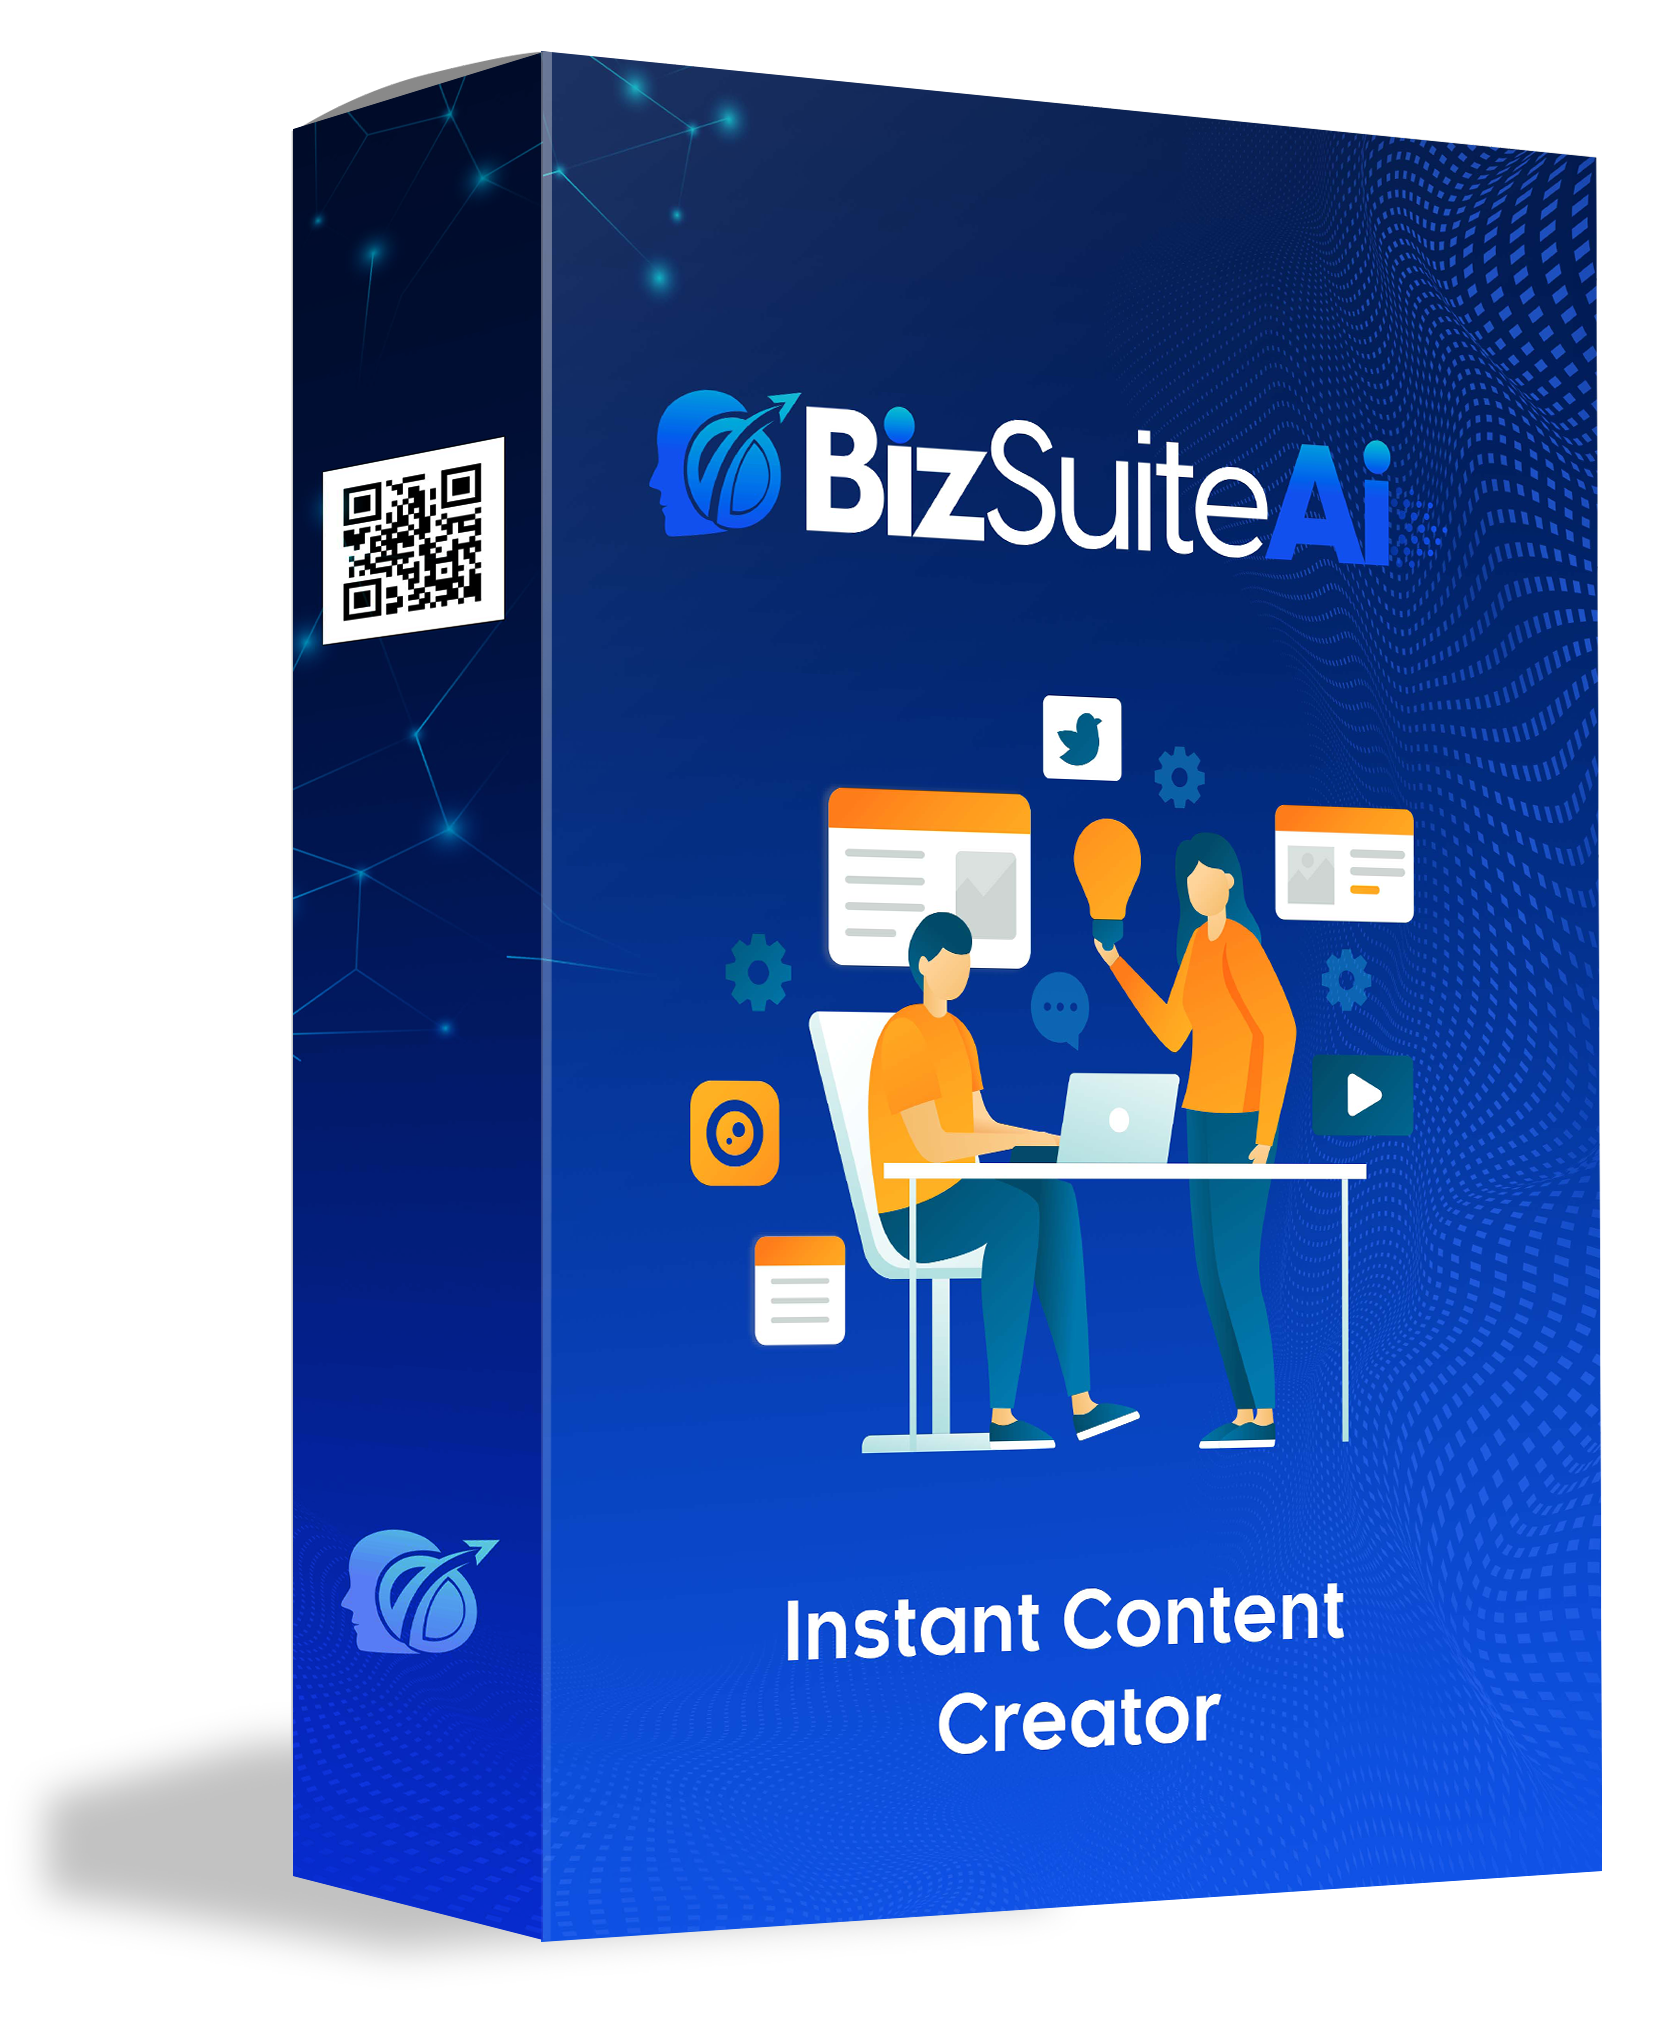 BizSuiteAI Review and demo